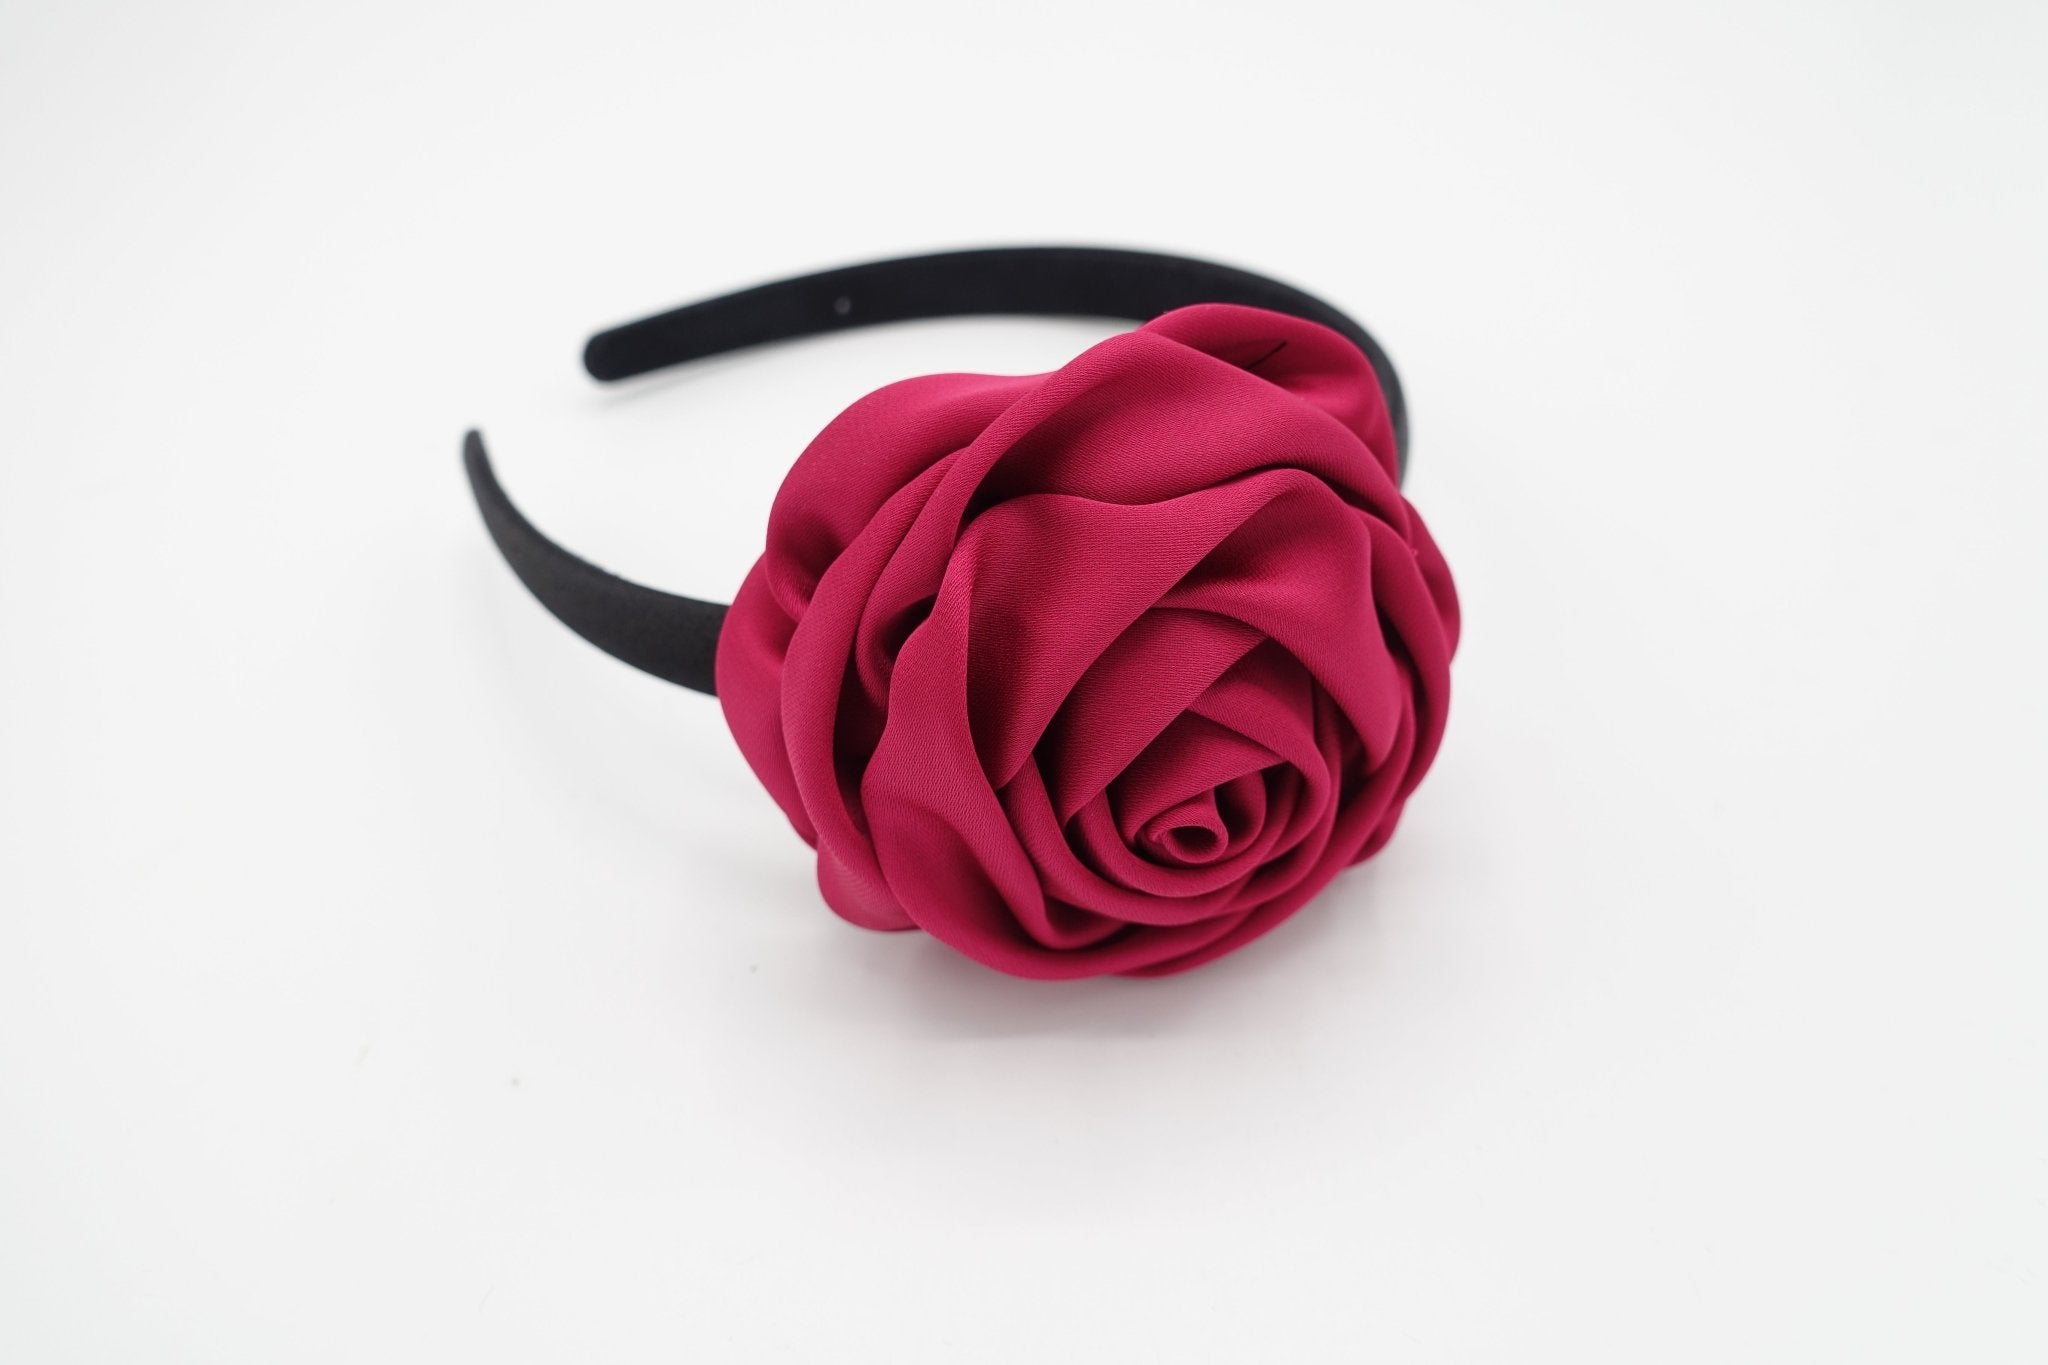 veryshine.com hairband/headband satin rose decorated black satin headband flower hairband simple women hair accessory